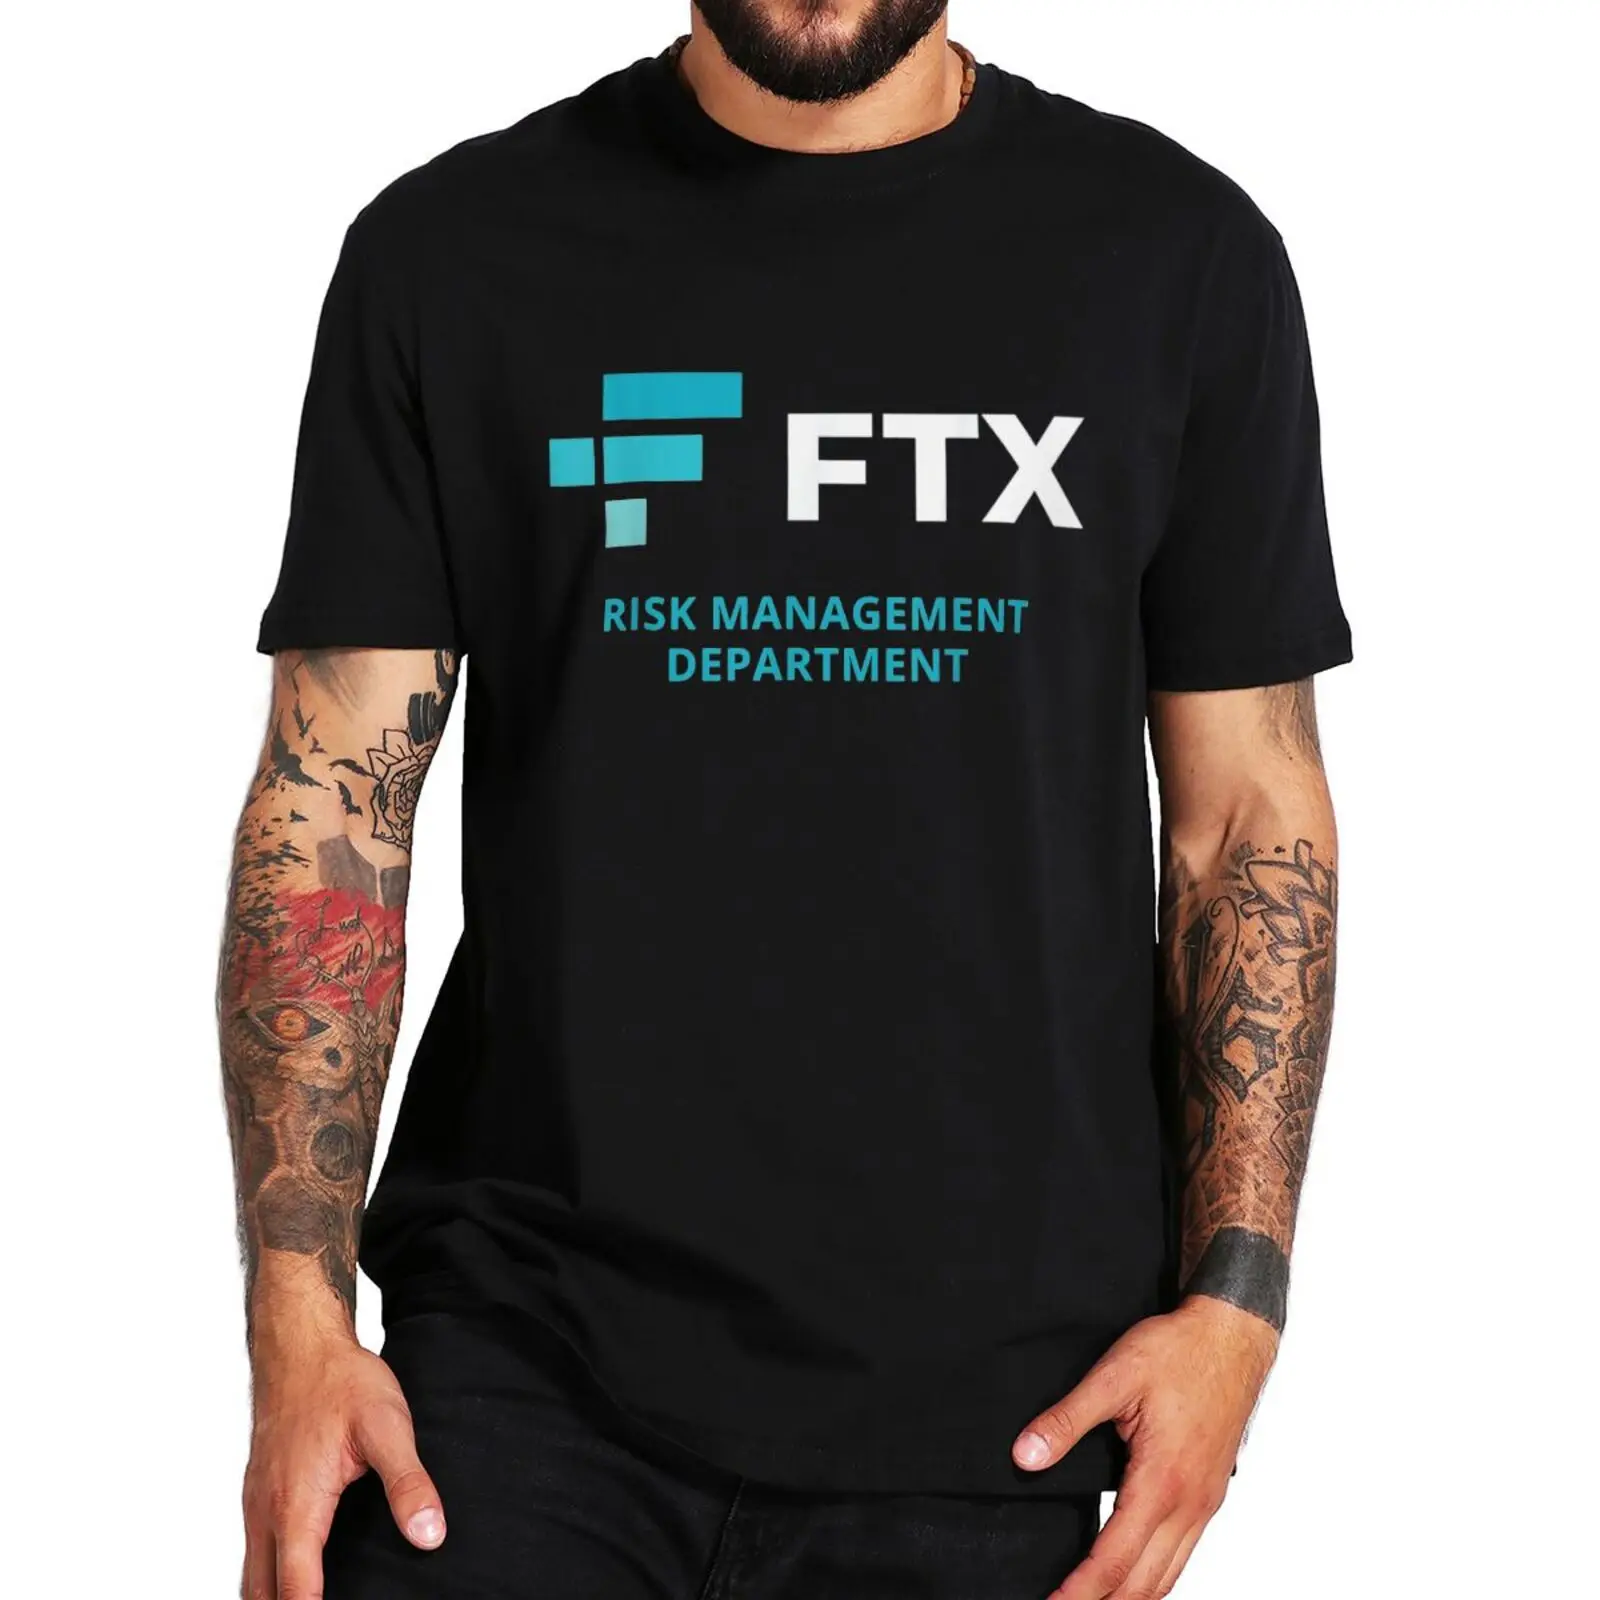 FTX Risk Management Department T Shirt 100% Cotton EU Size Tops Tee